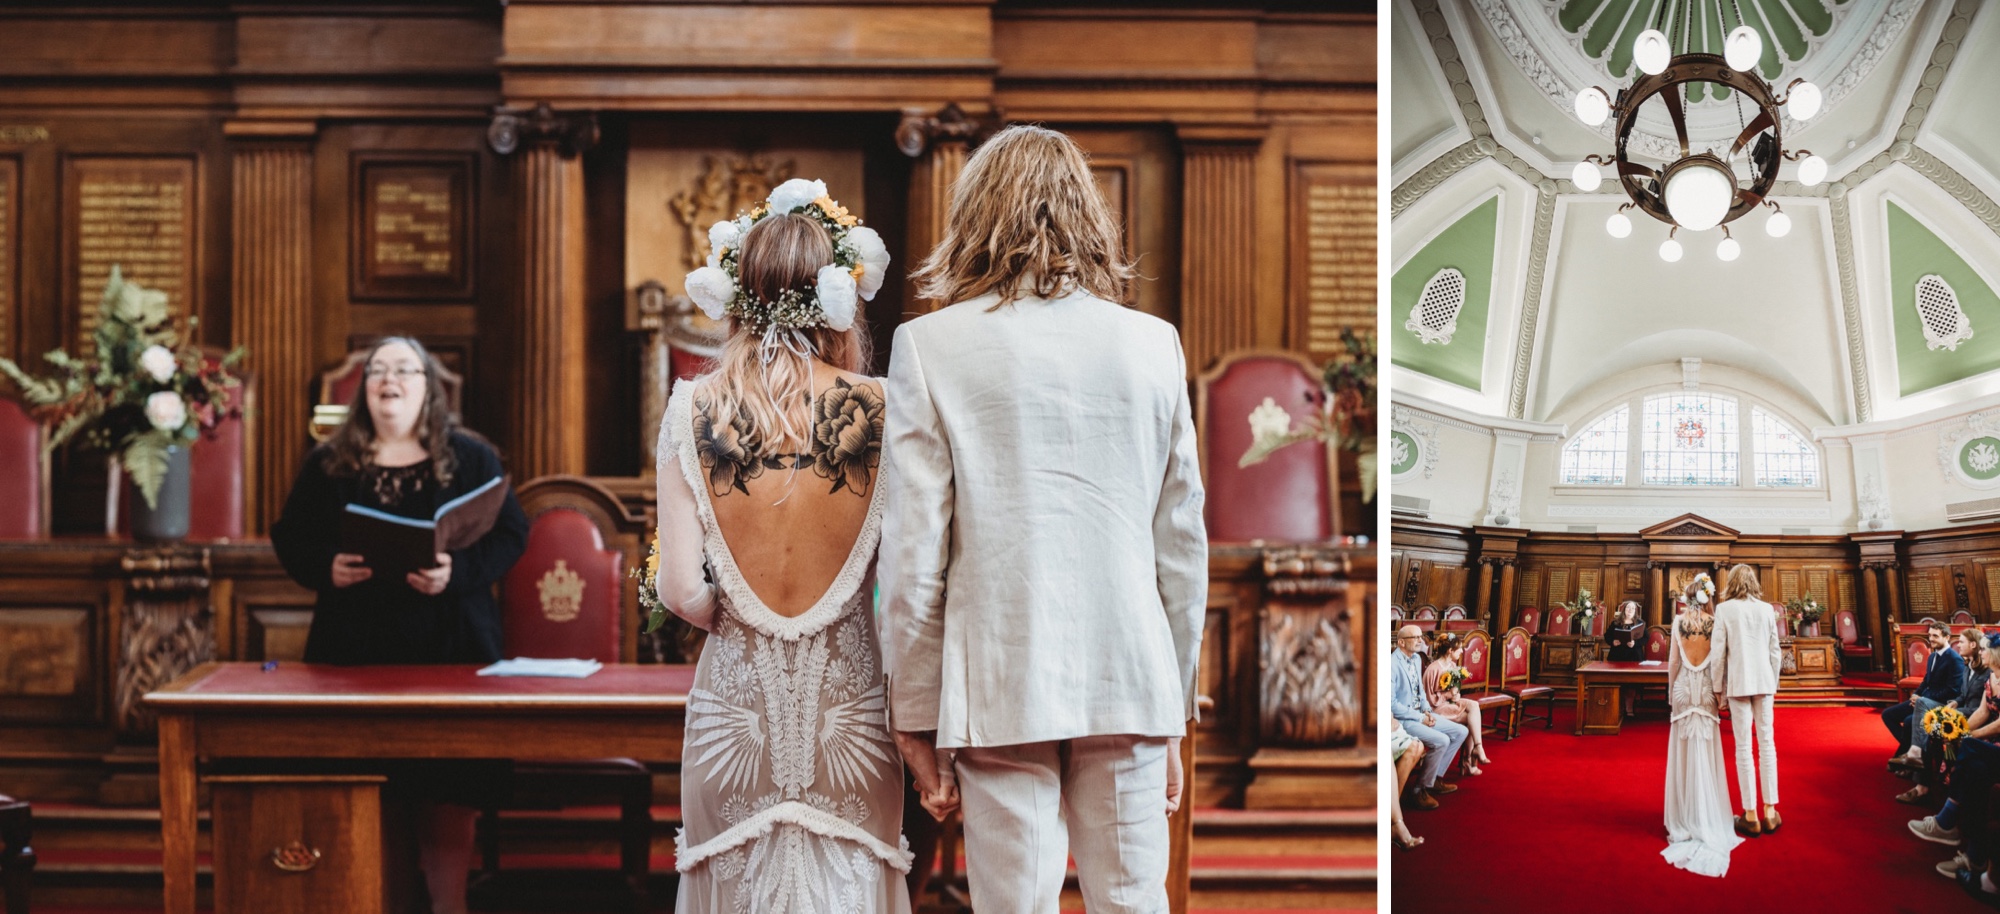 hackney London wedding ceremony by zakas photography 